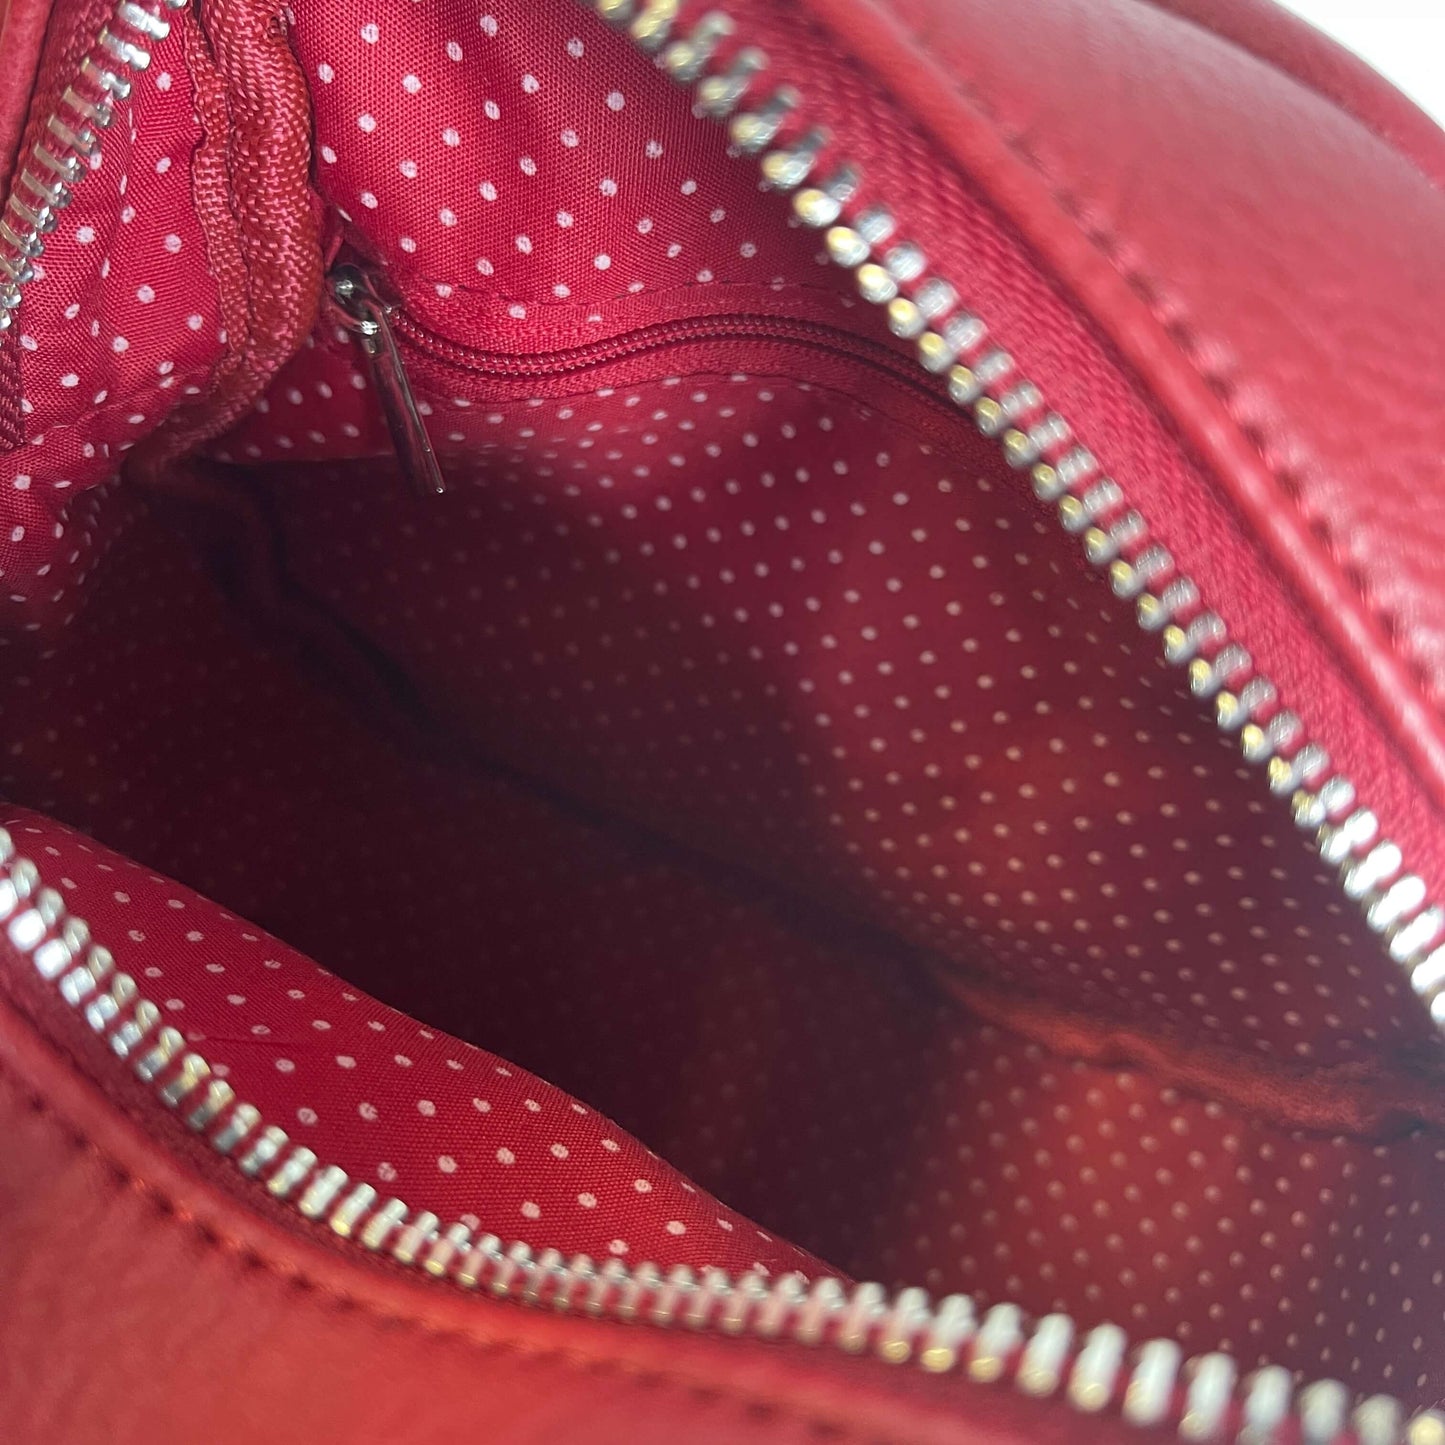 Lining of a red circular handbag by Moana Rd.